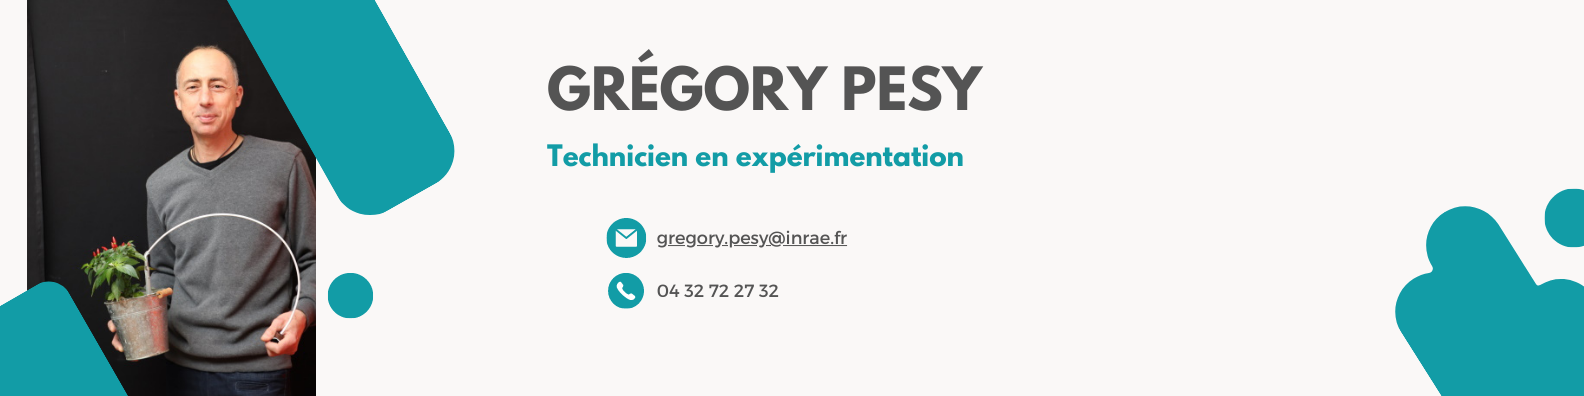 Grégory Pesy.png